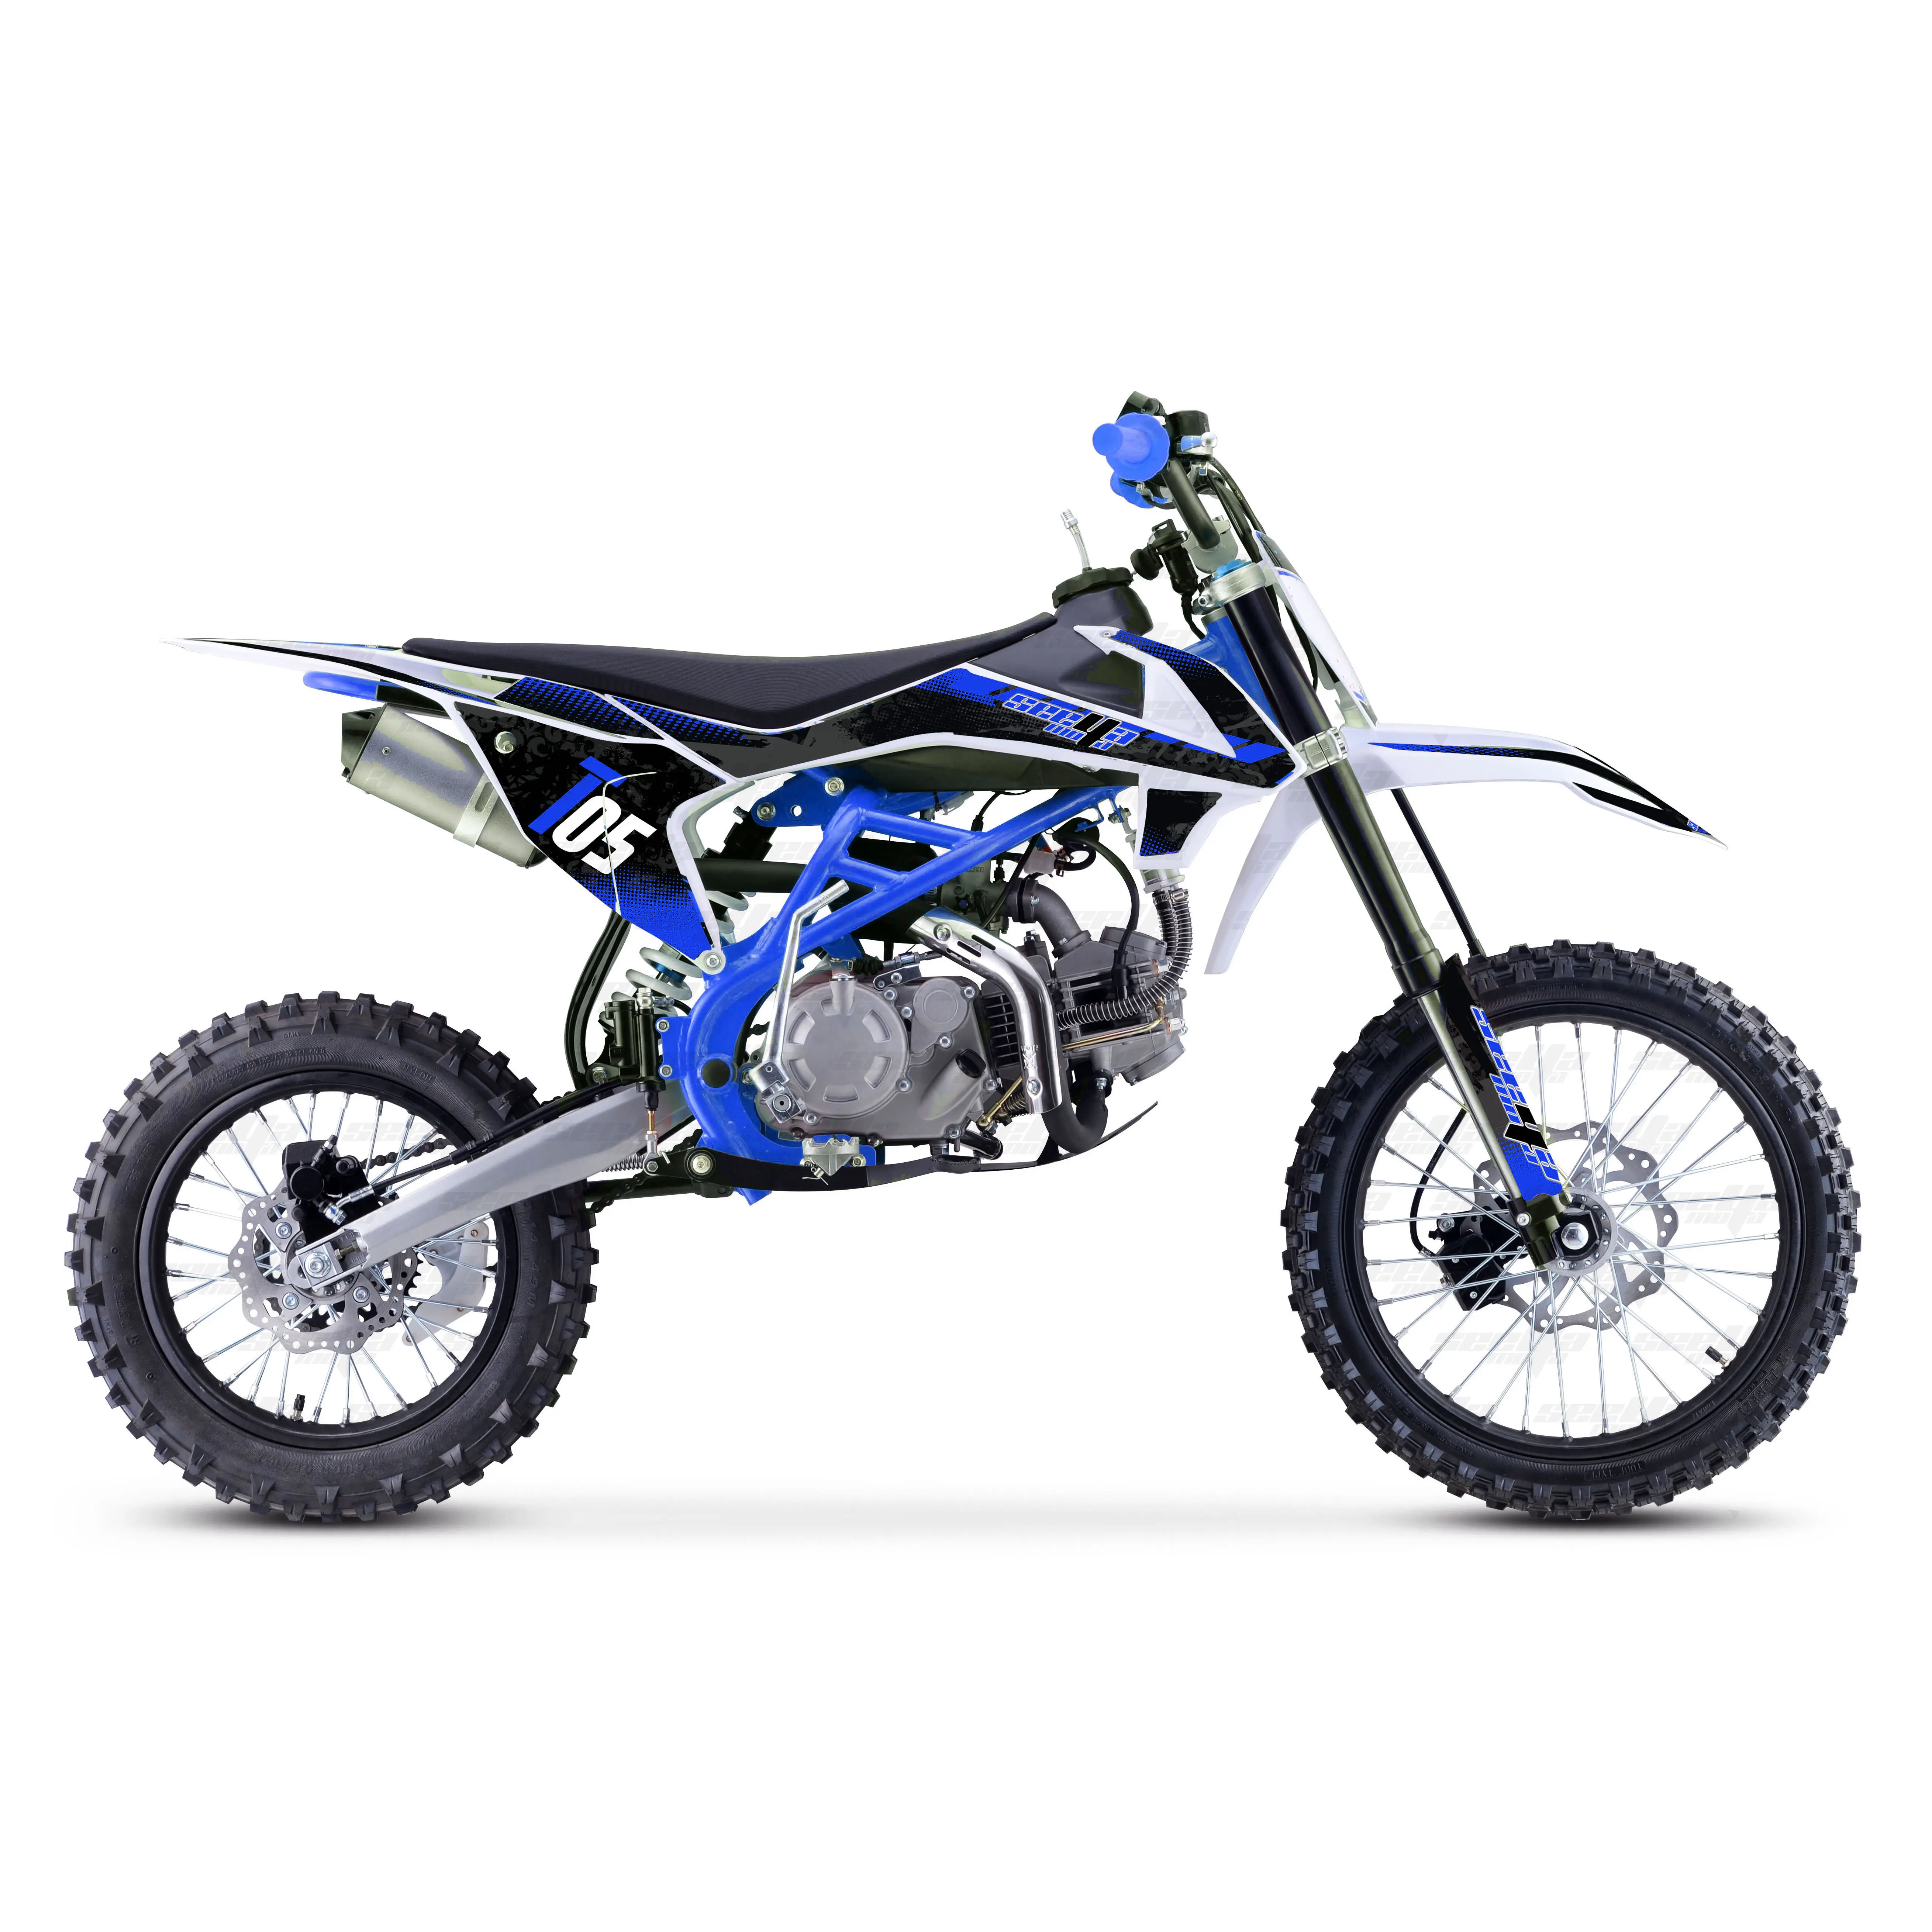 New blue SEEYA 155 ZONGSHEN MOTO CROSS pit bike OFF ROAD motorcycle gasoline dirt bike cross motorcycle T05 155cc with CE